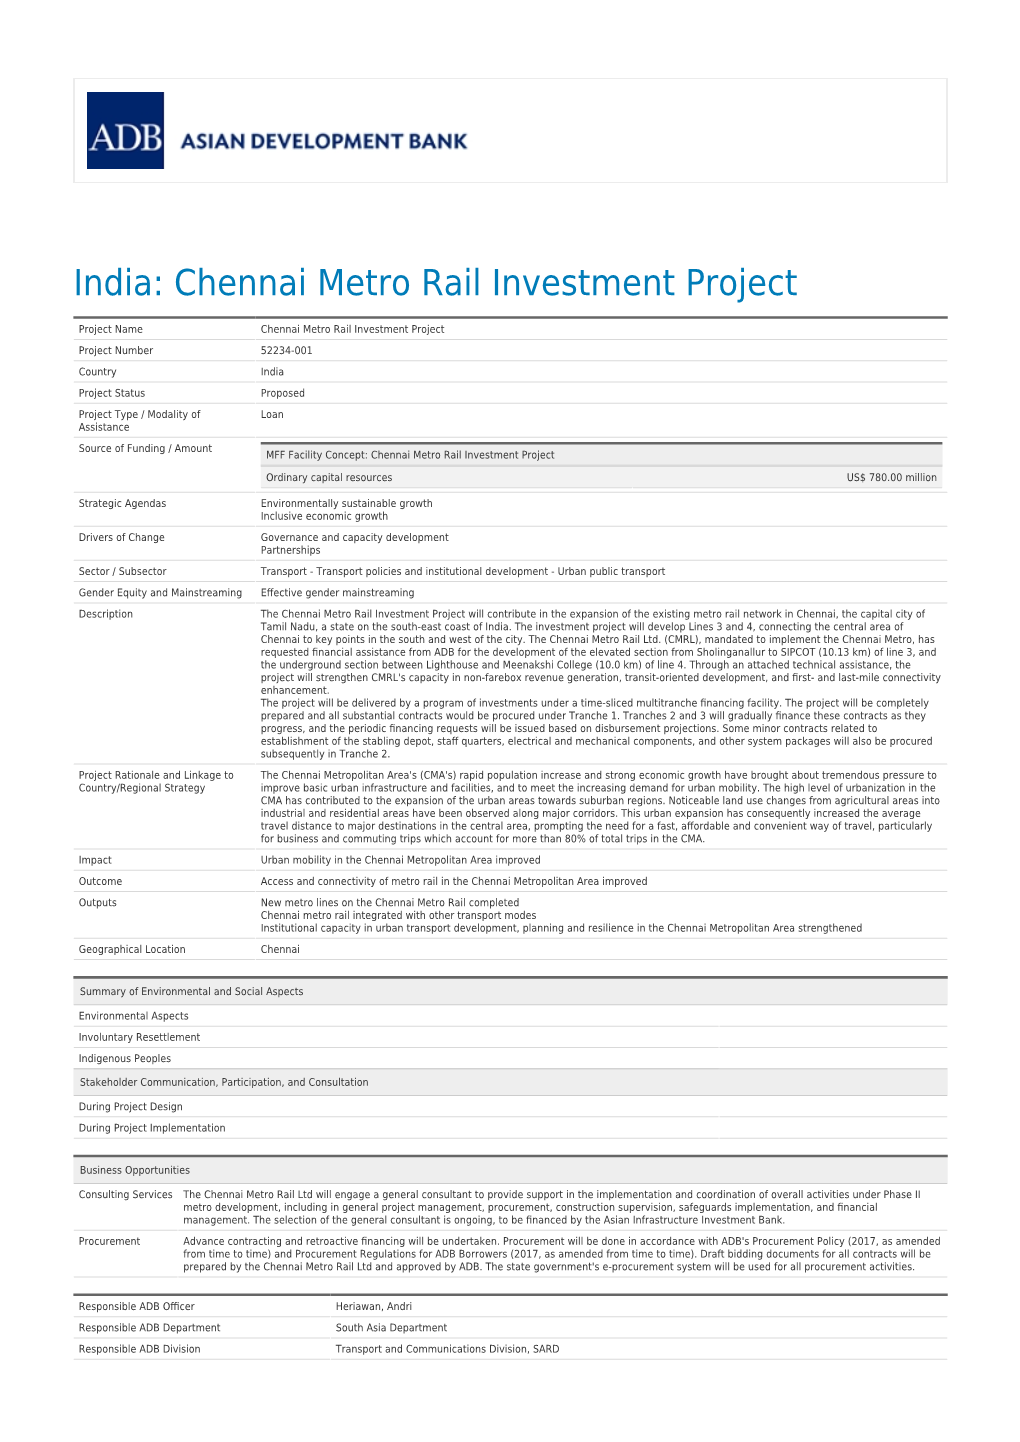 Chennai Metro Rail Investment Project